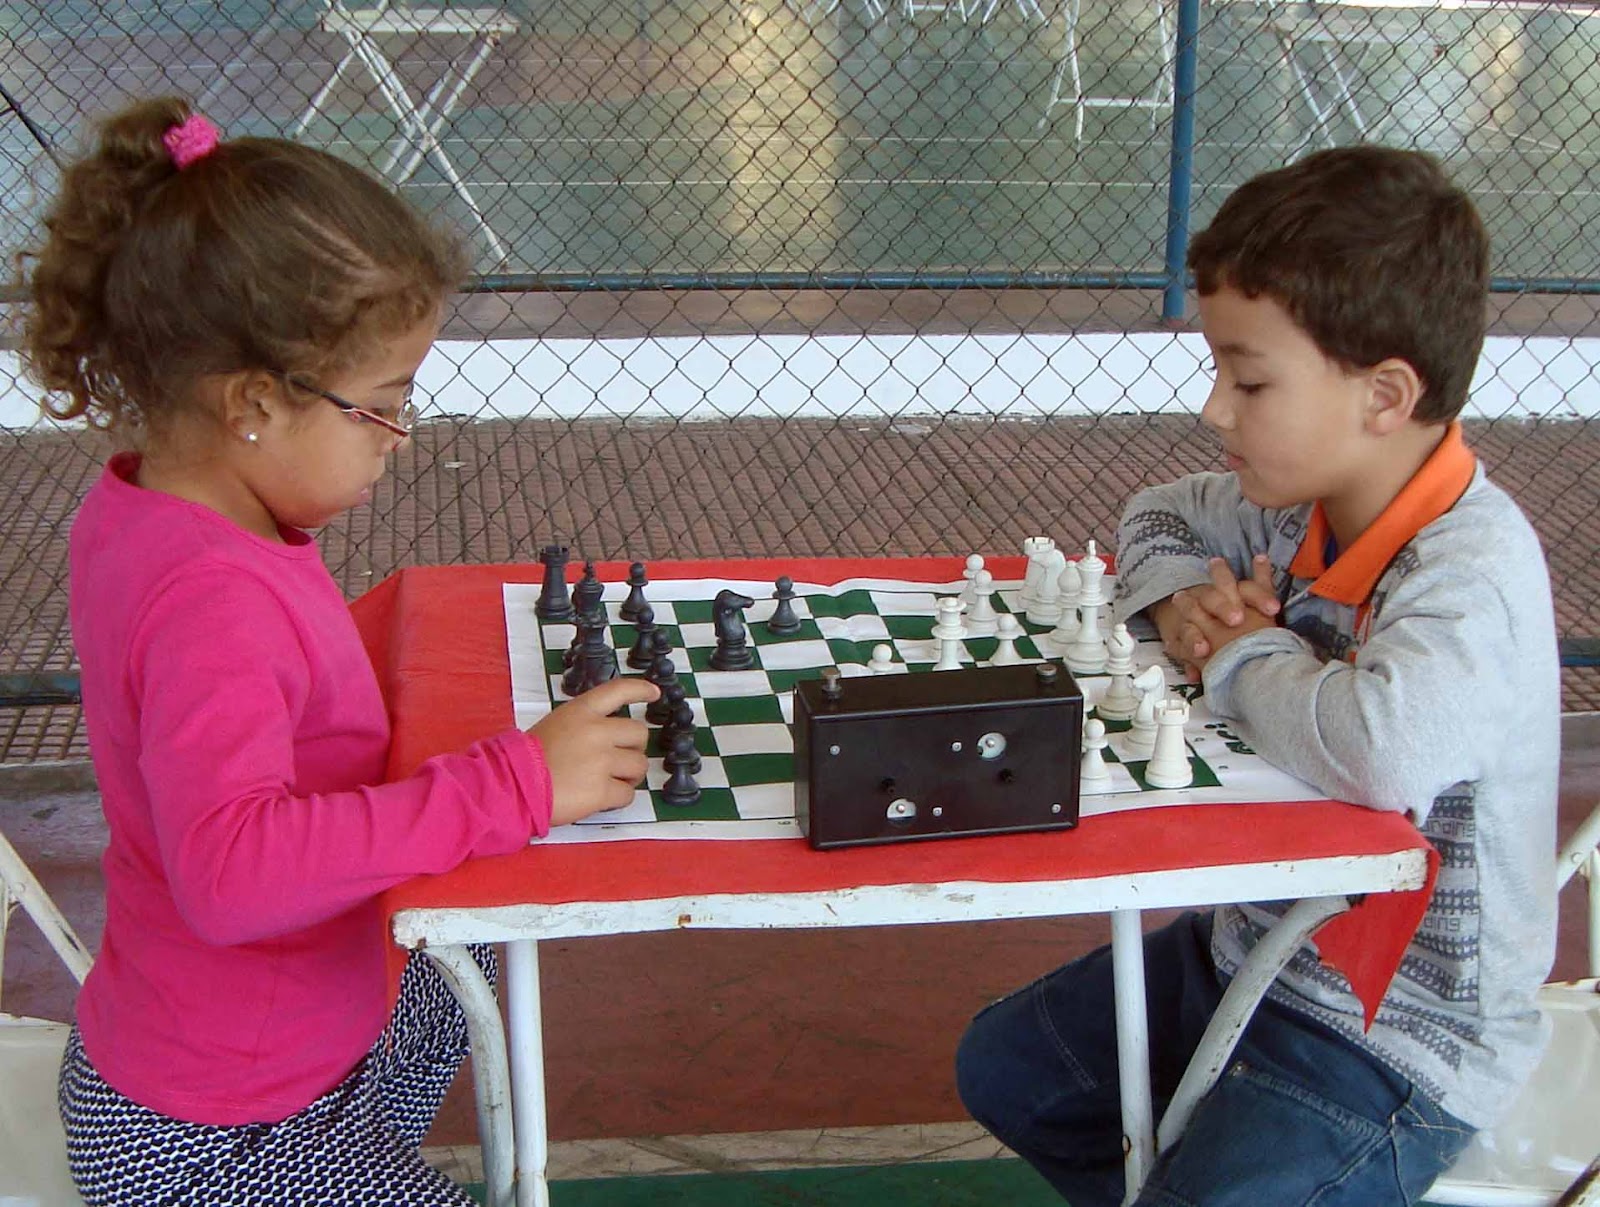 Estudantes de Itatiaia participam de torneio de xadrez no RJ